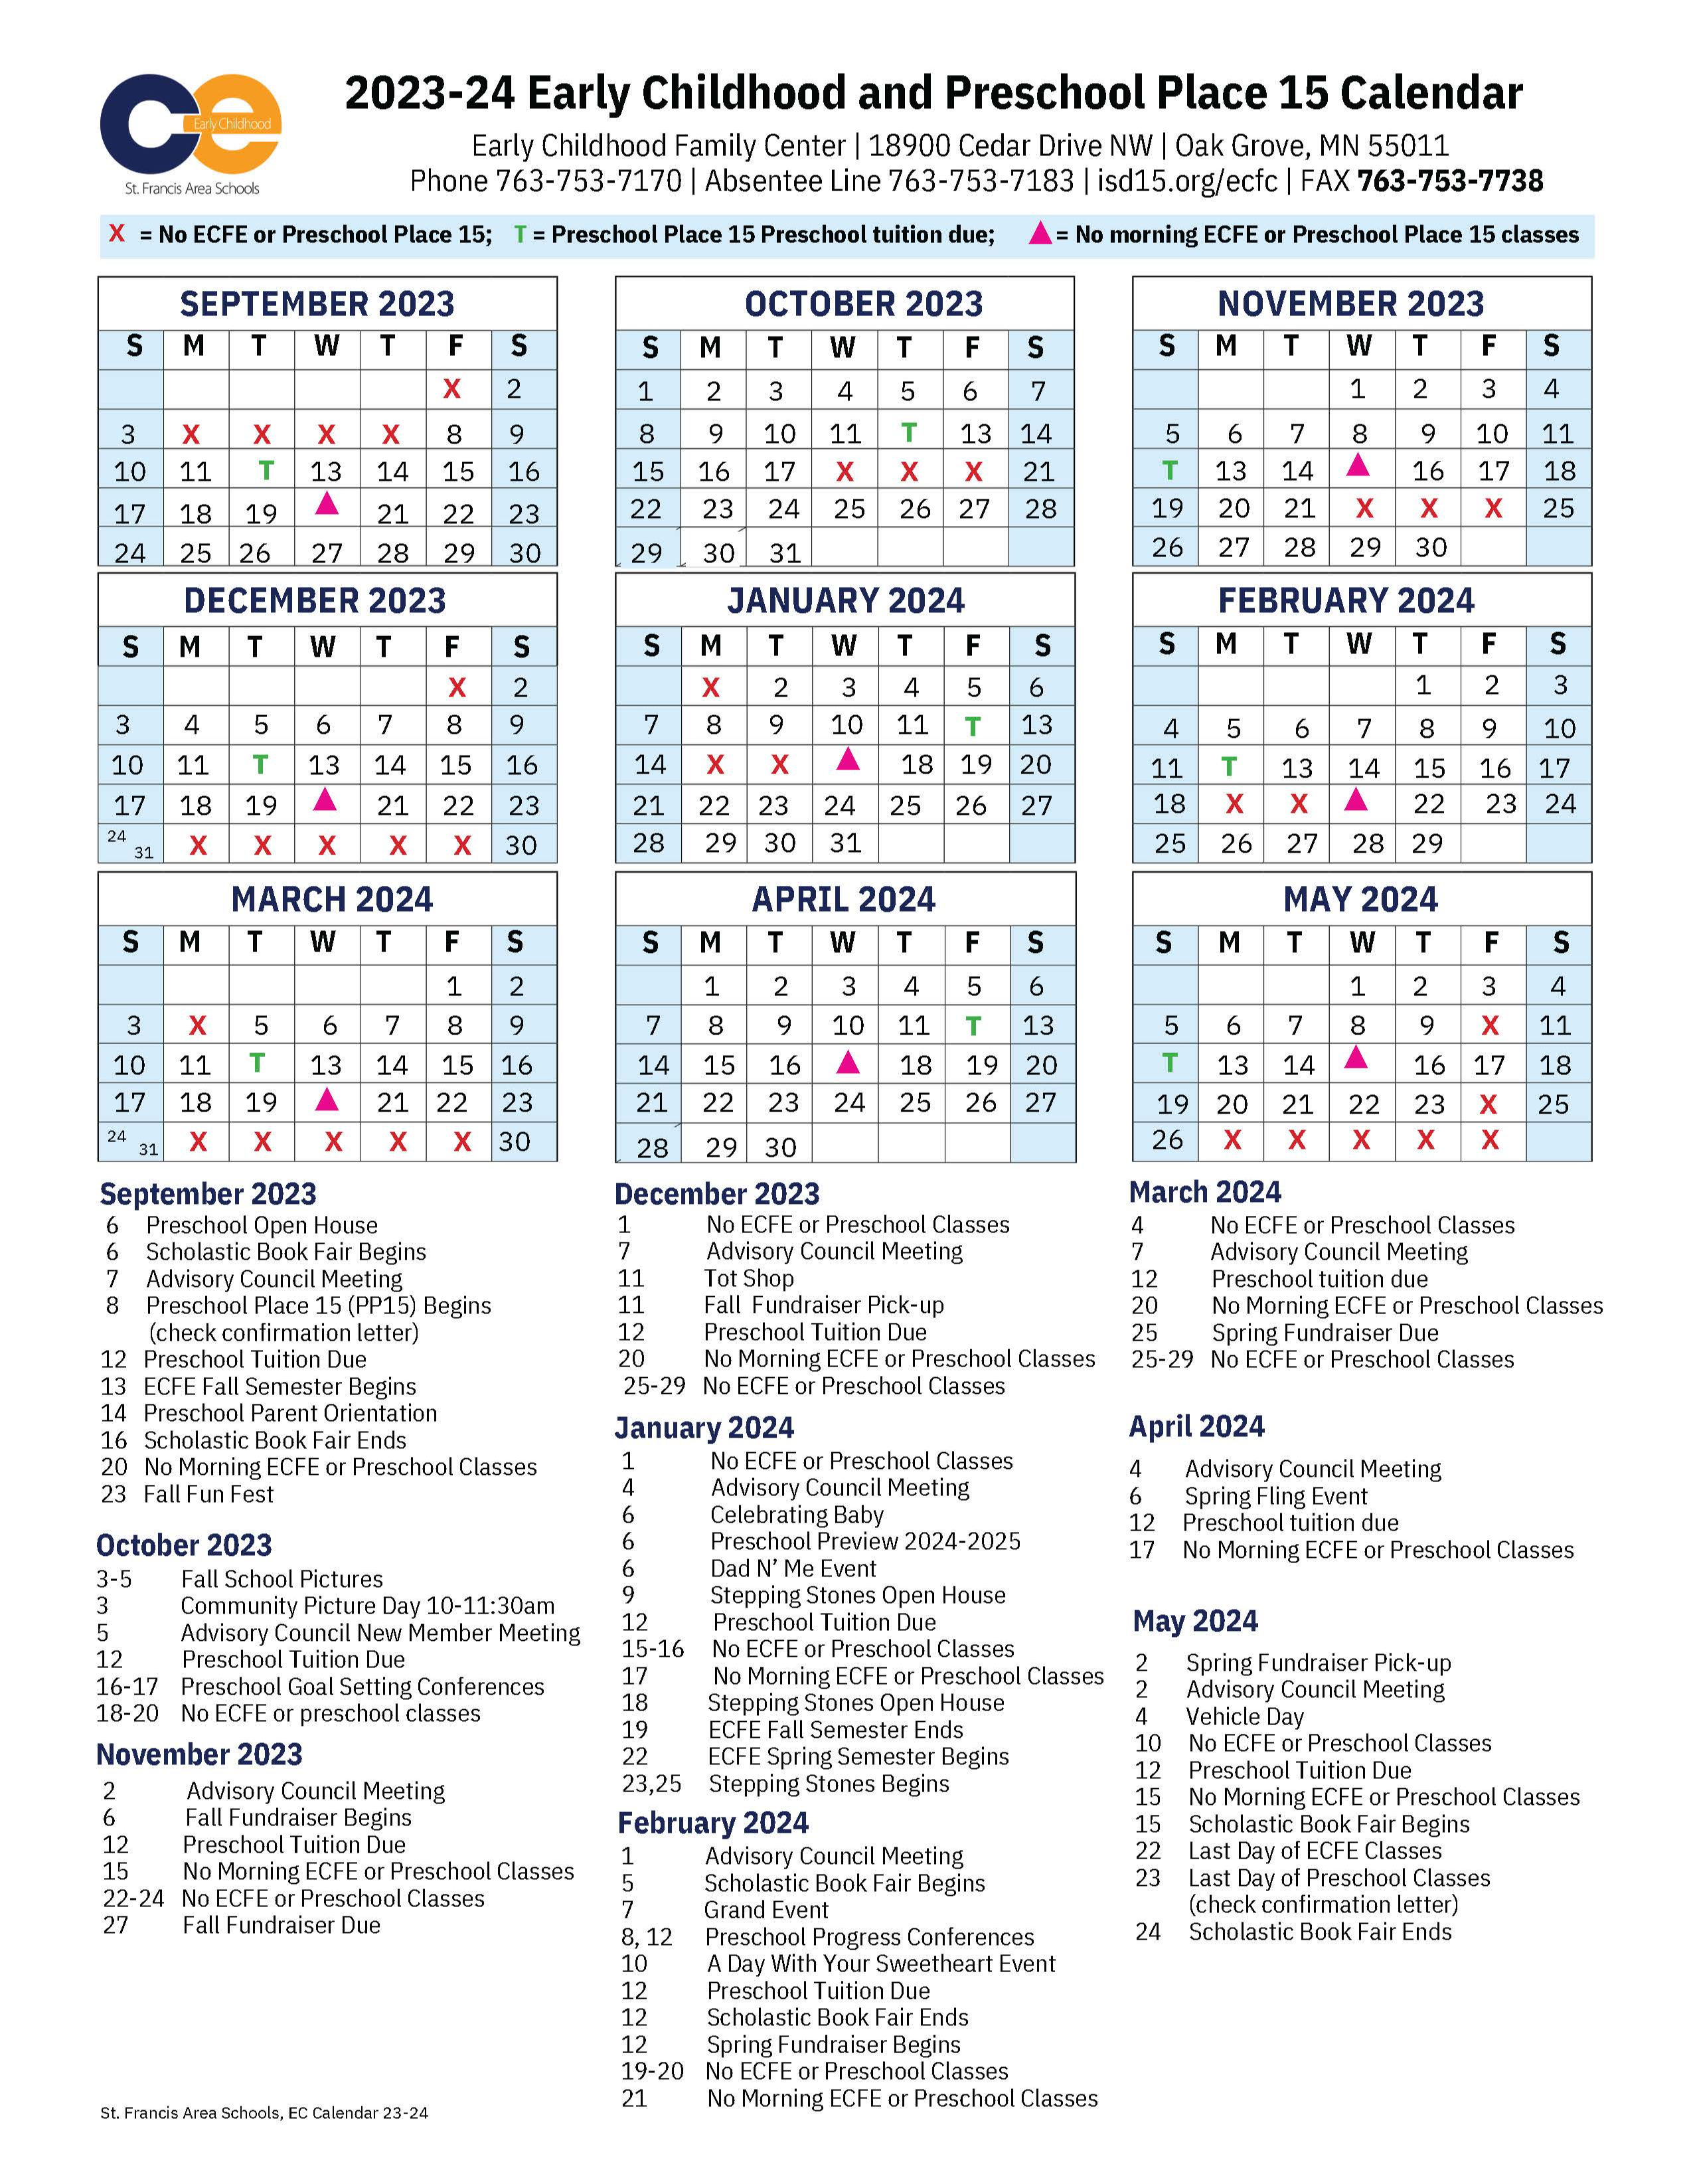 ECFE & Preschool Place 15 calendar for 2023-24 school year